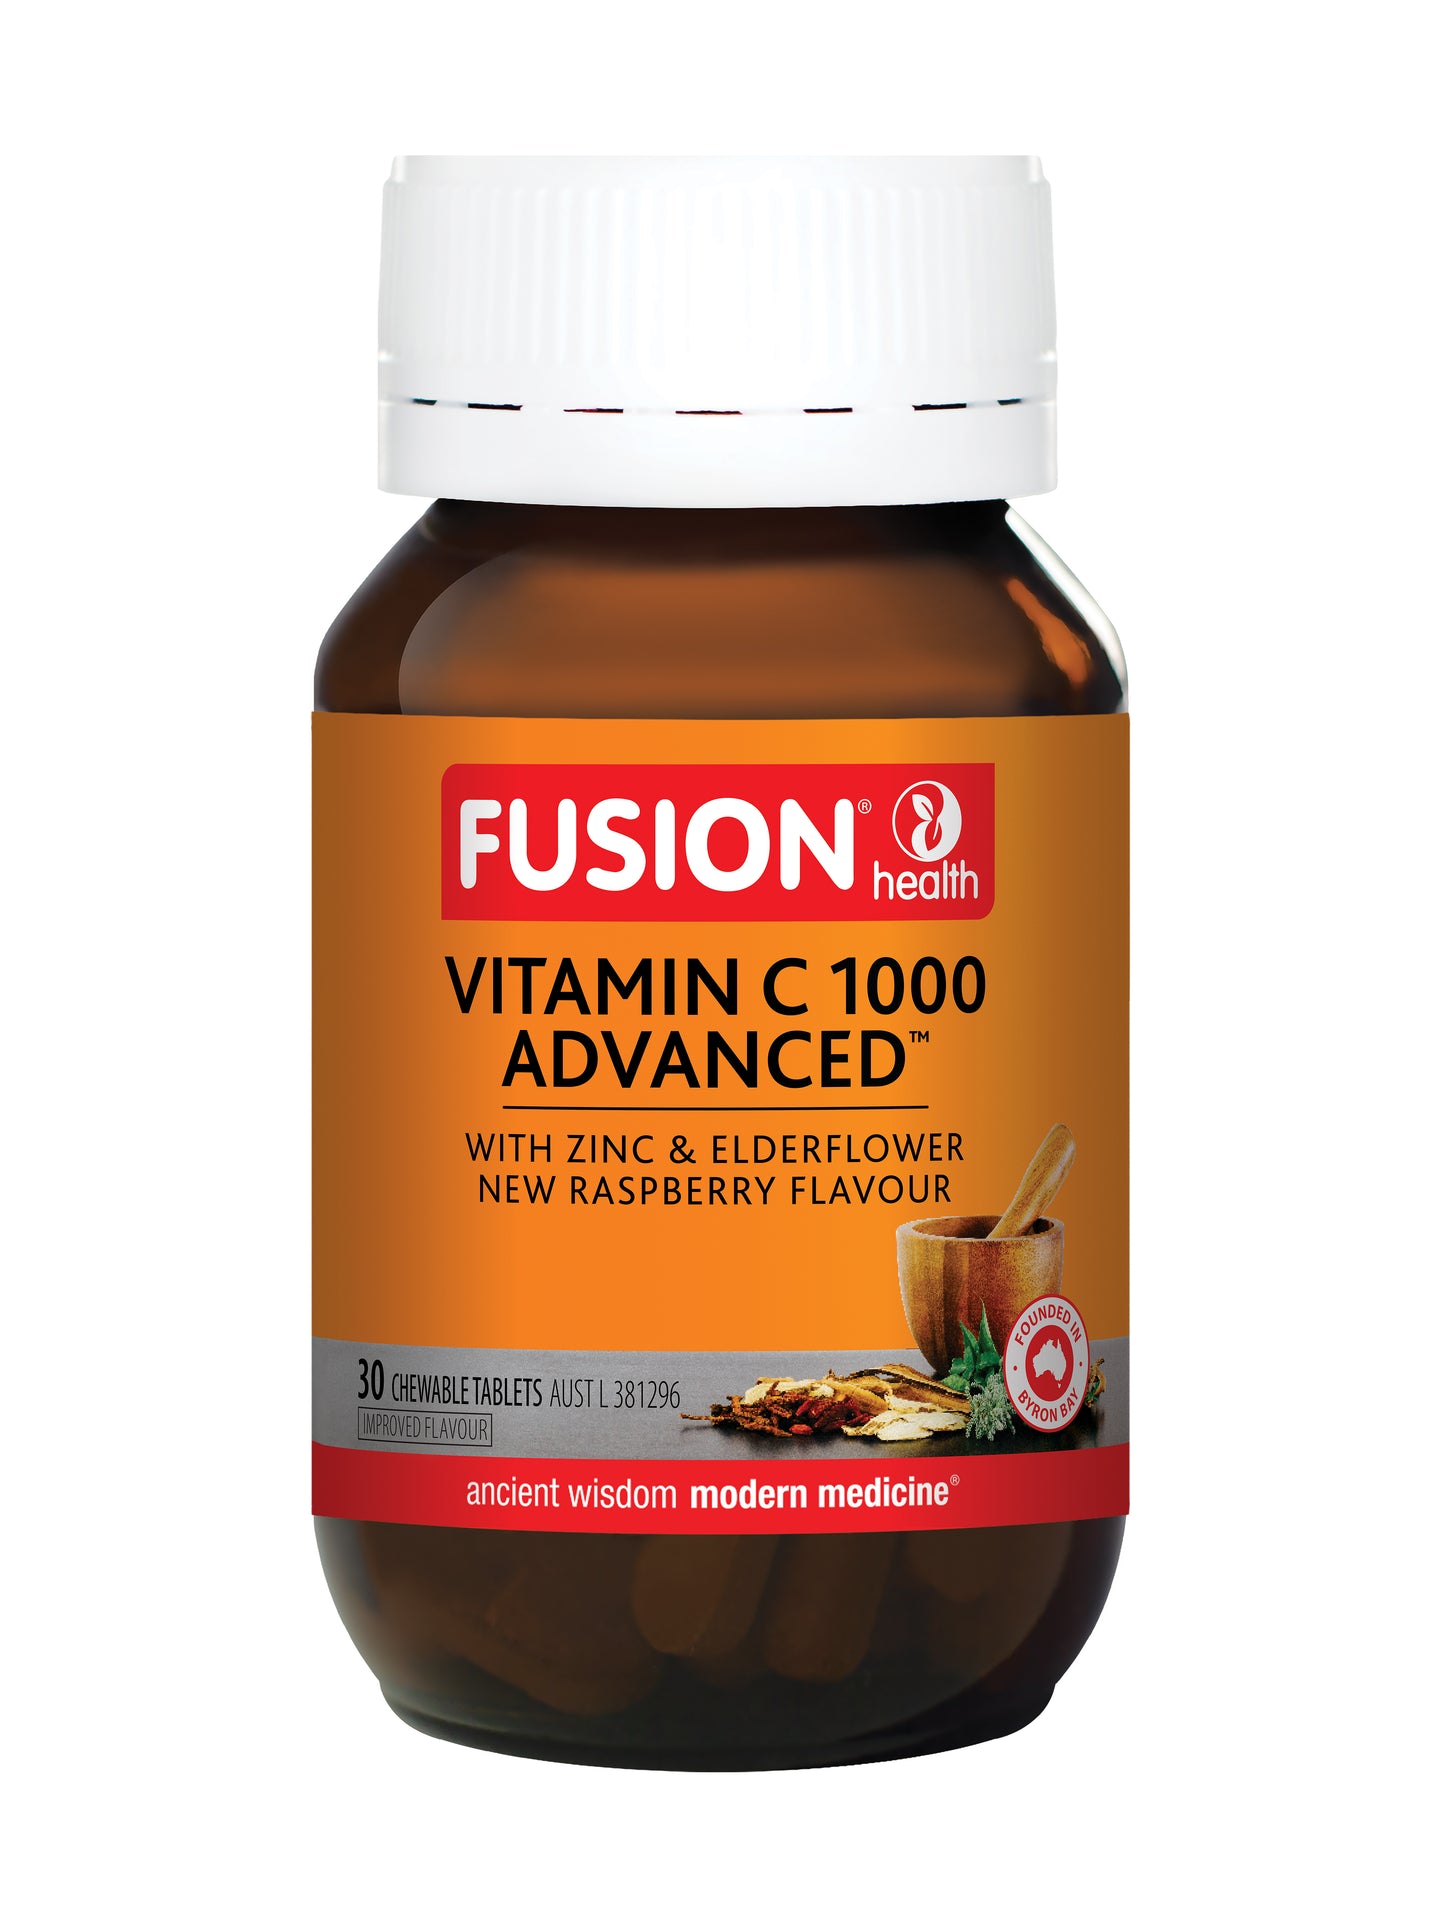 Vitamin C 1000 Advanced